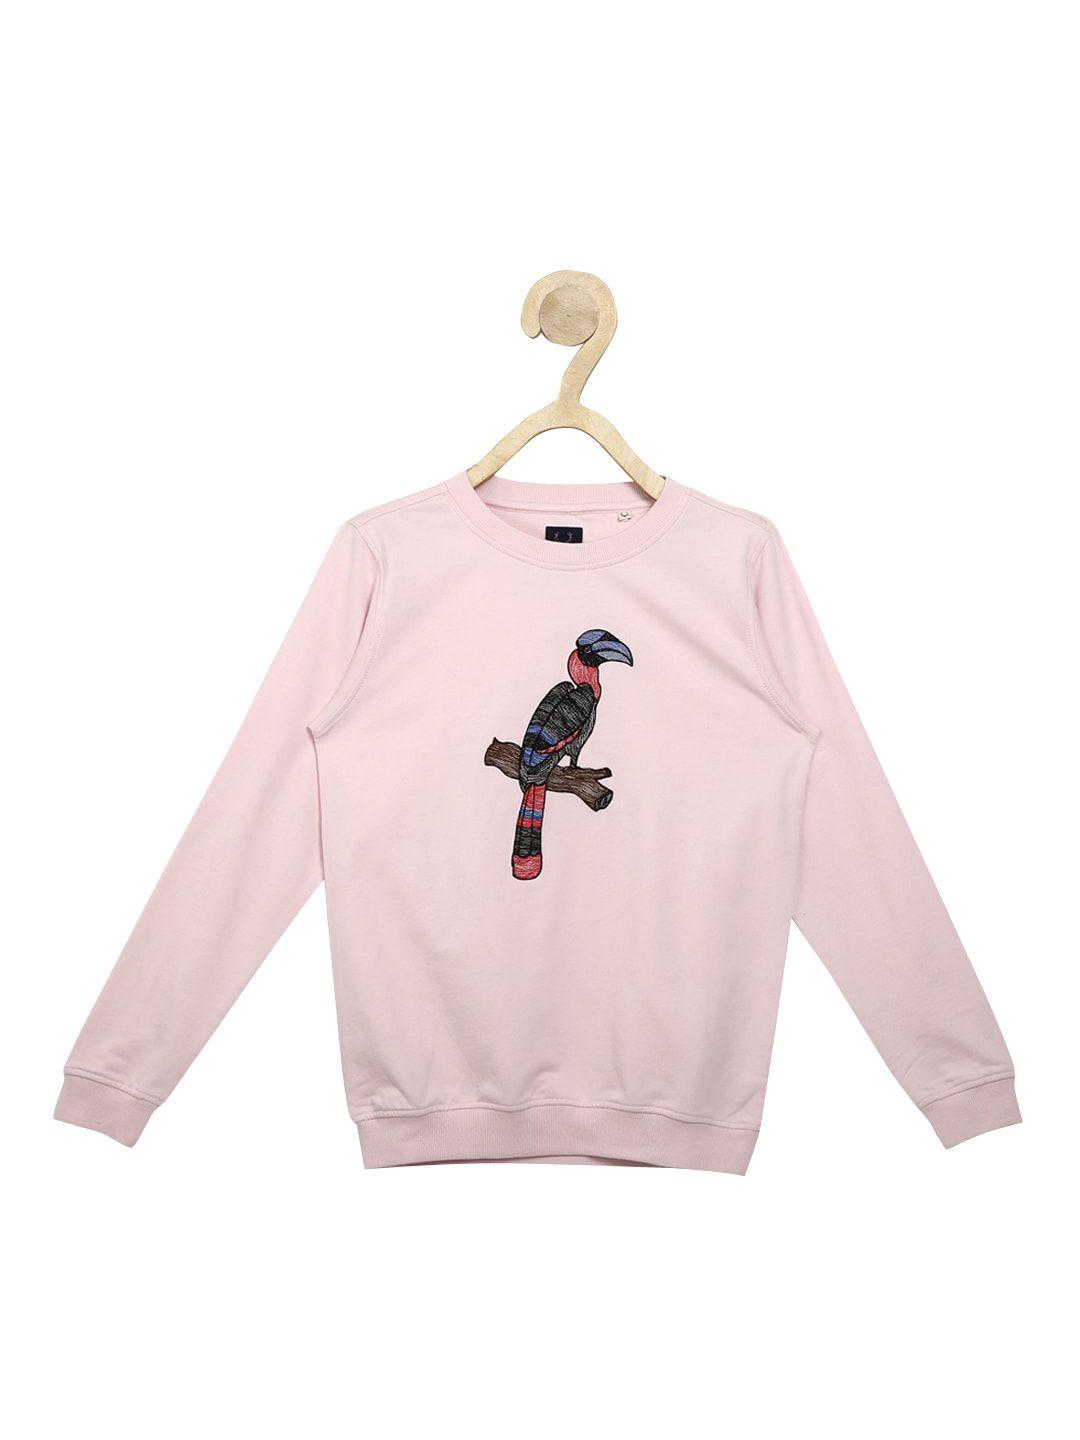 allen solly junior boys pink embroidered pure cotton sweatshirt